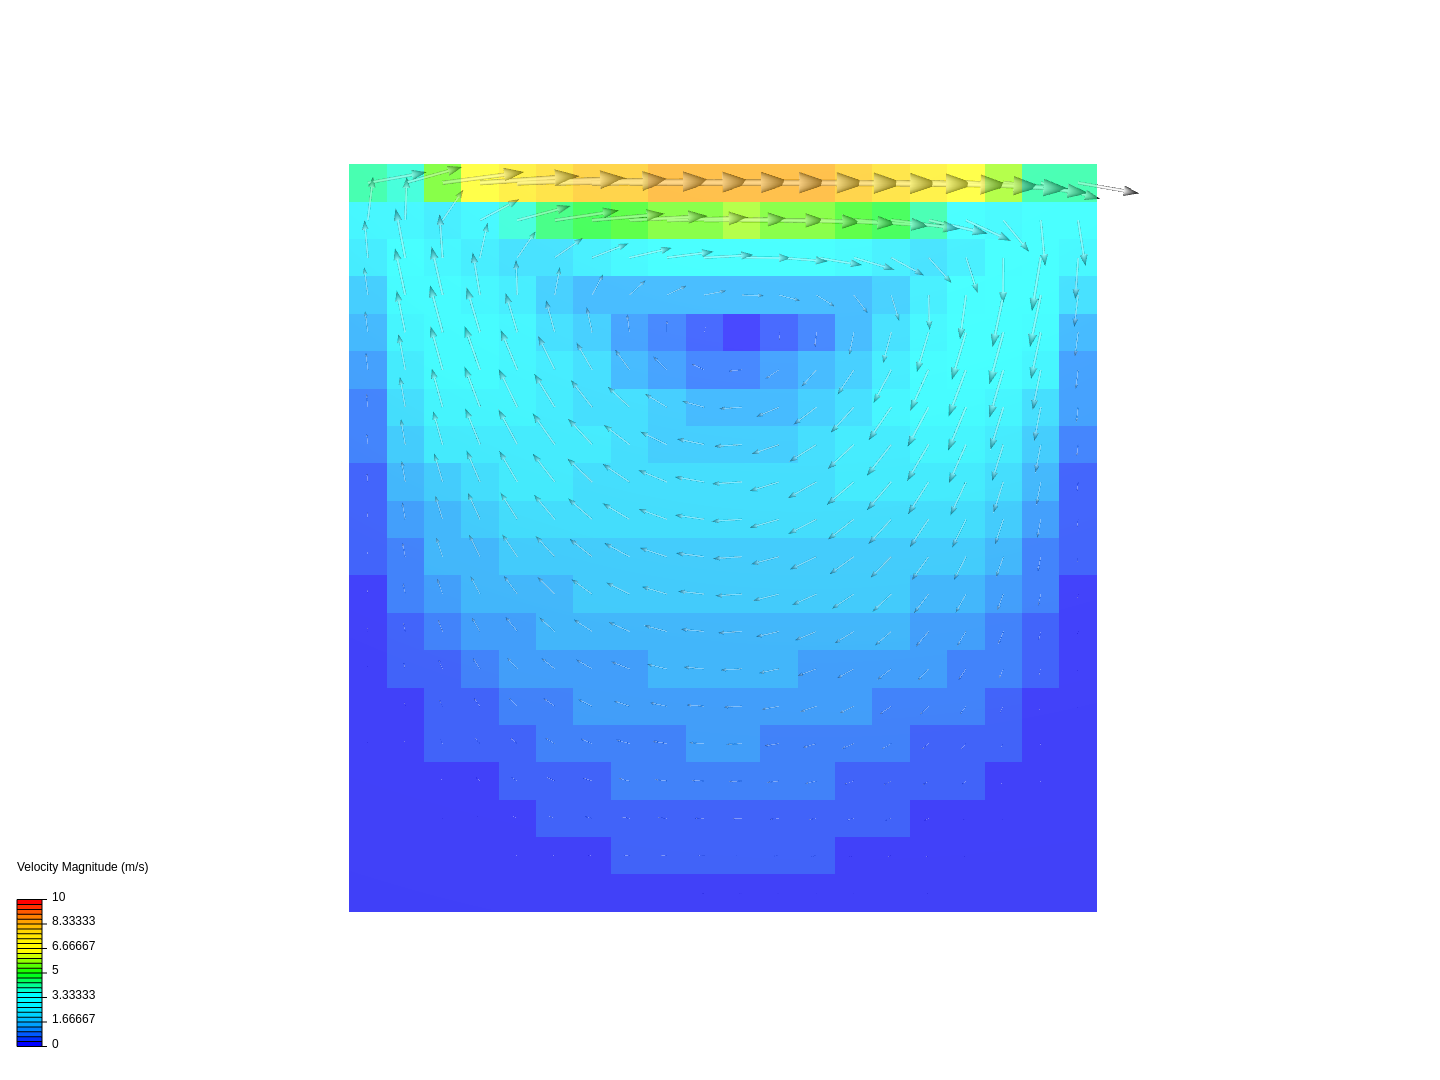 lid-drivencavity image